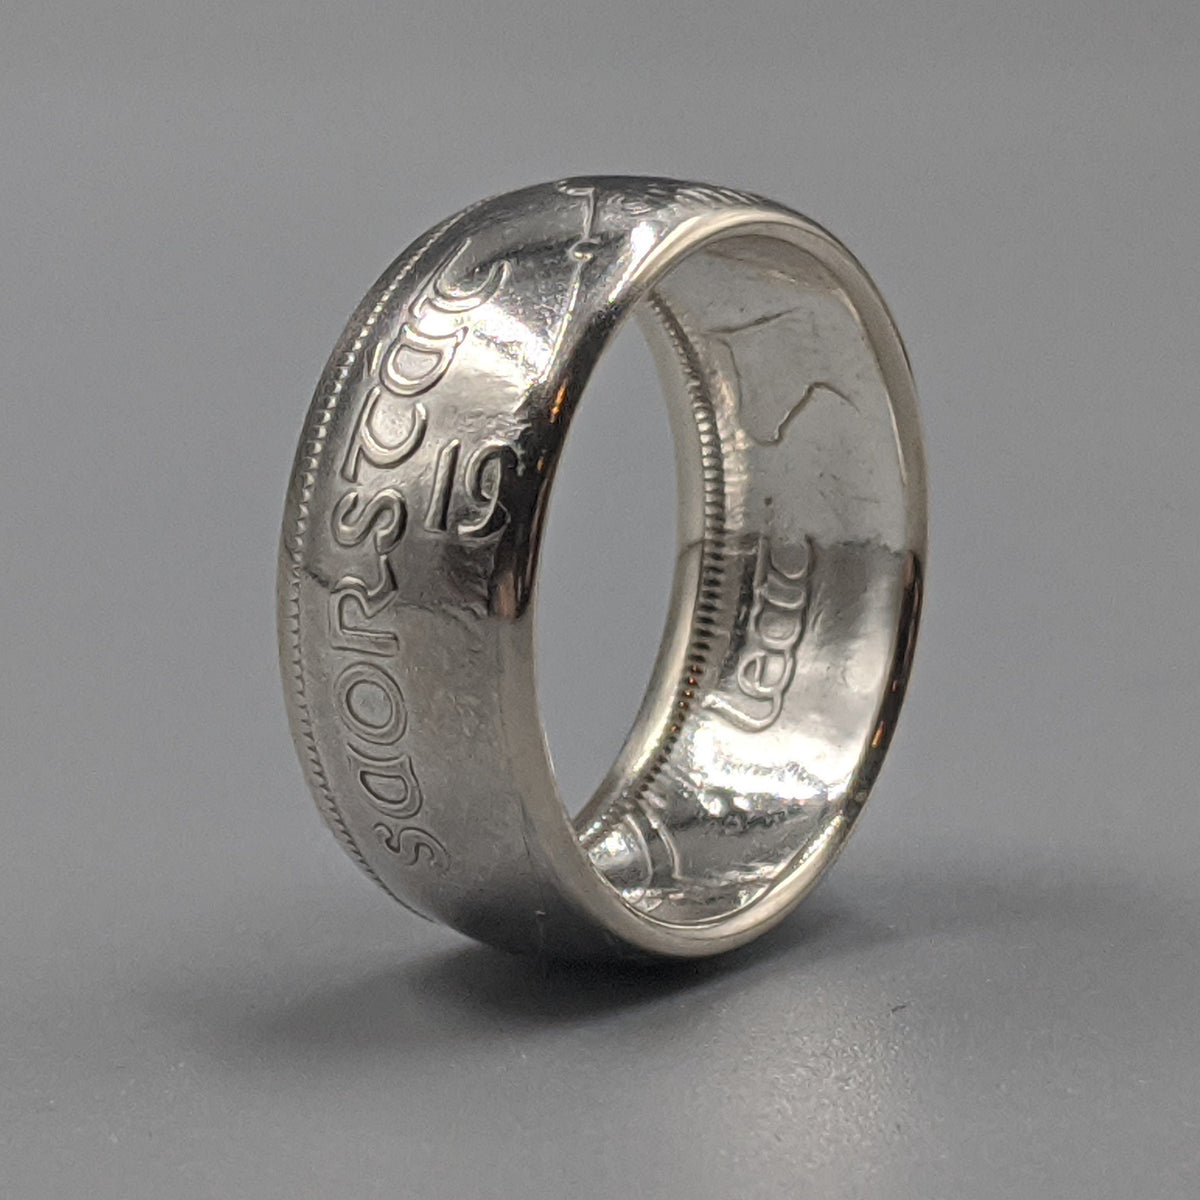 Irish Silver Half Crown Coin Ring